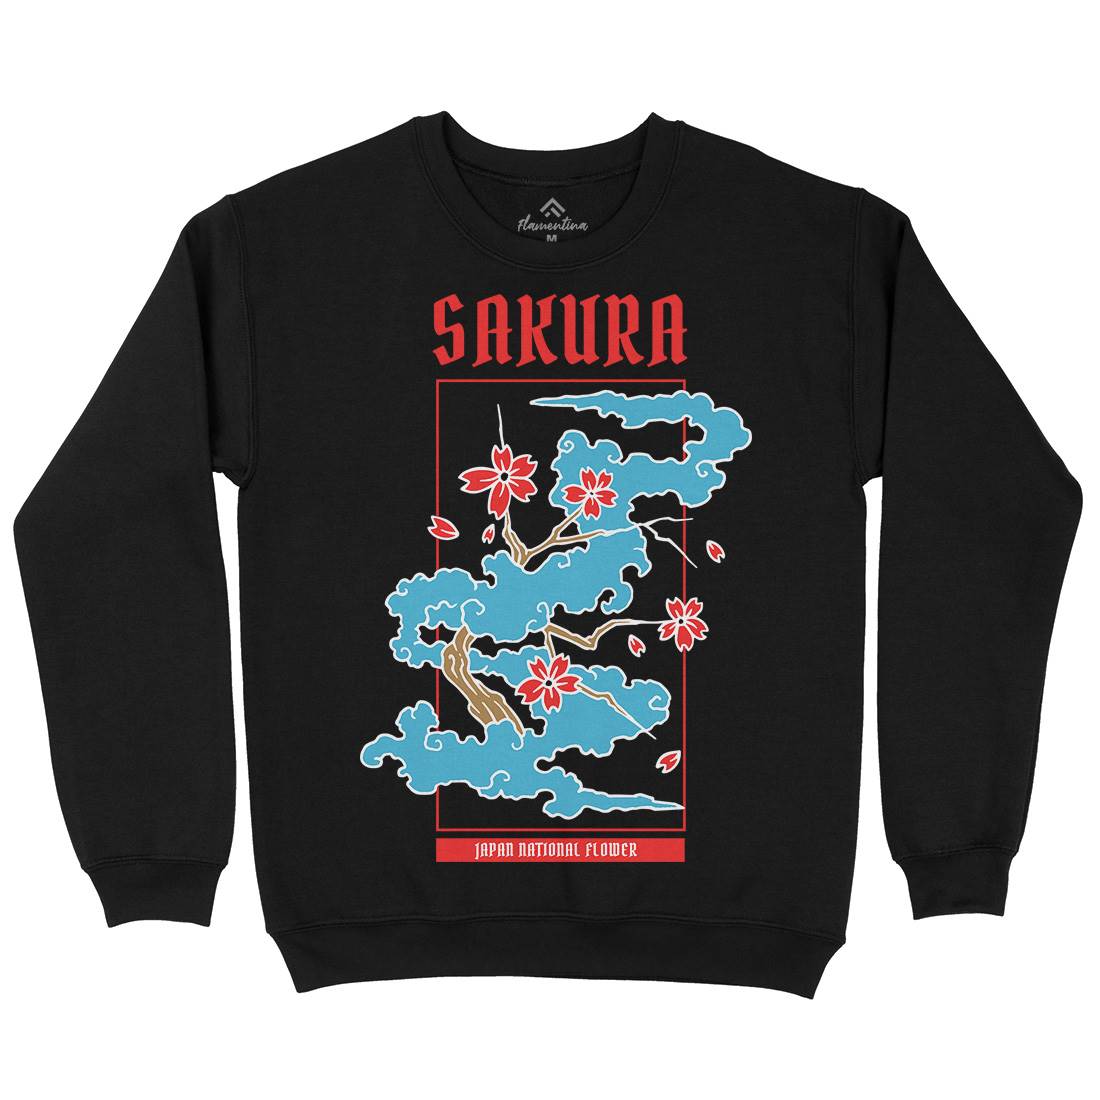 Sakura Kids Crew Neck Sweatshirt Asian C766